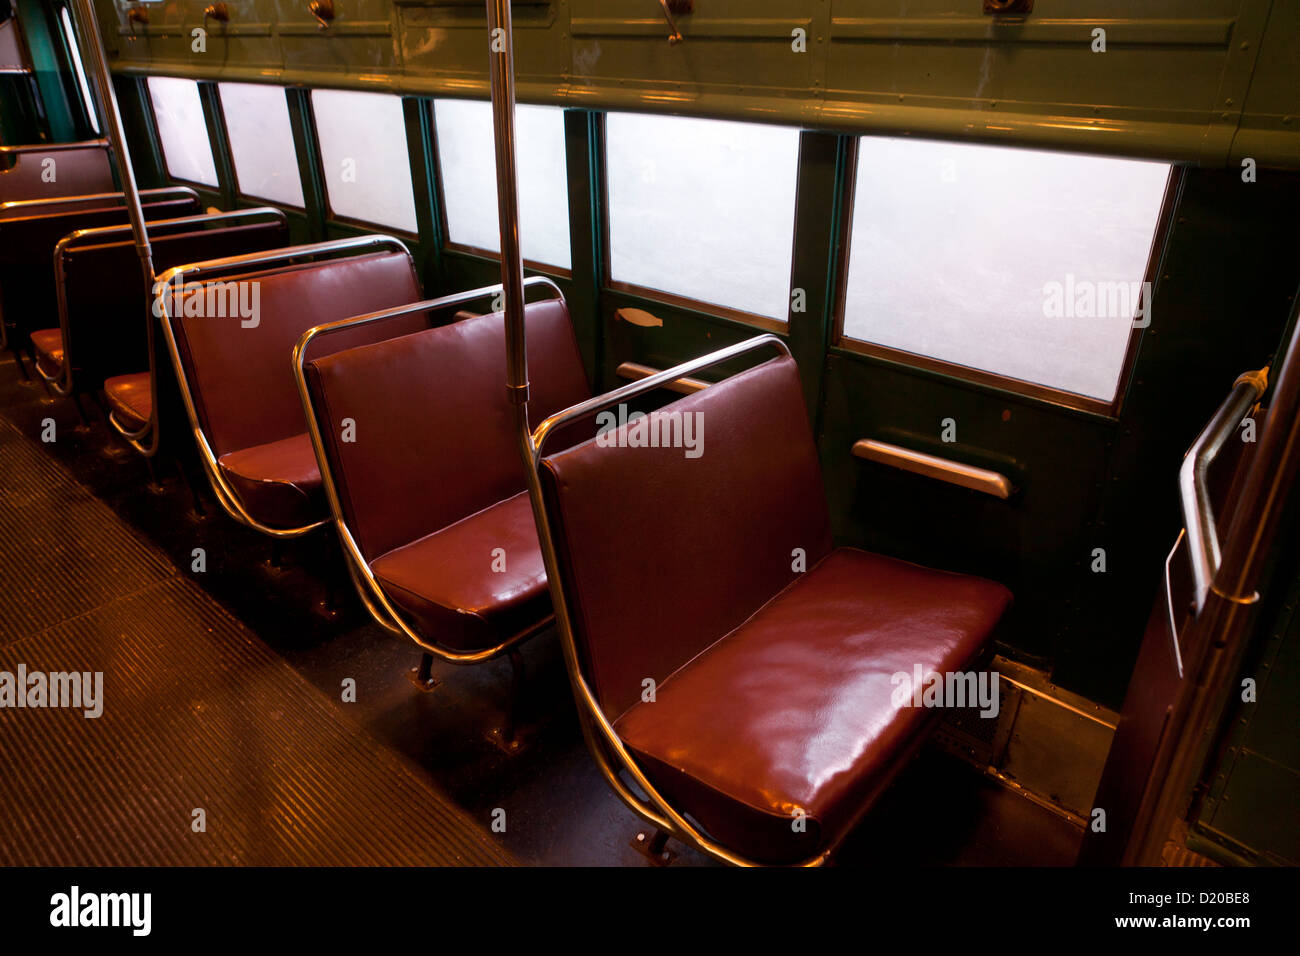 Vintage commuter train interno Foto Stock